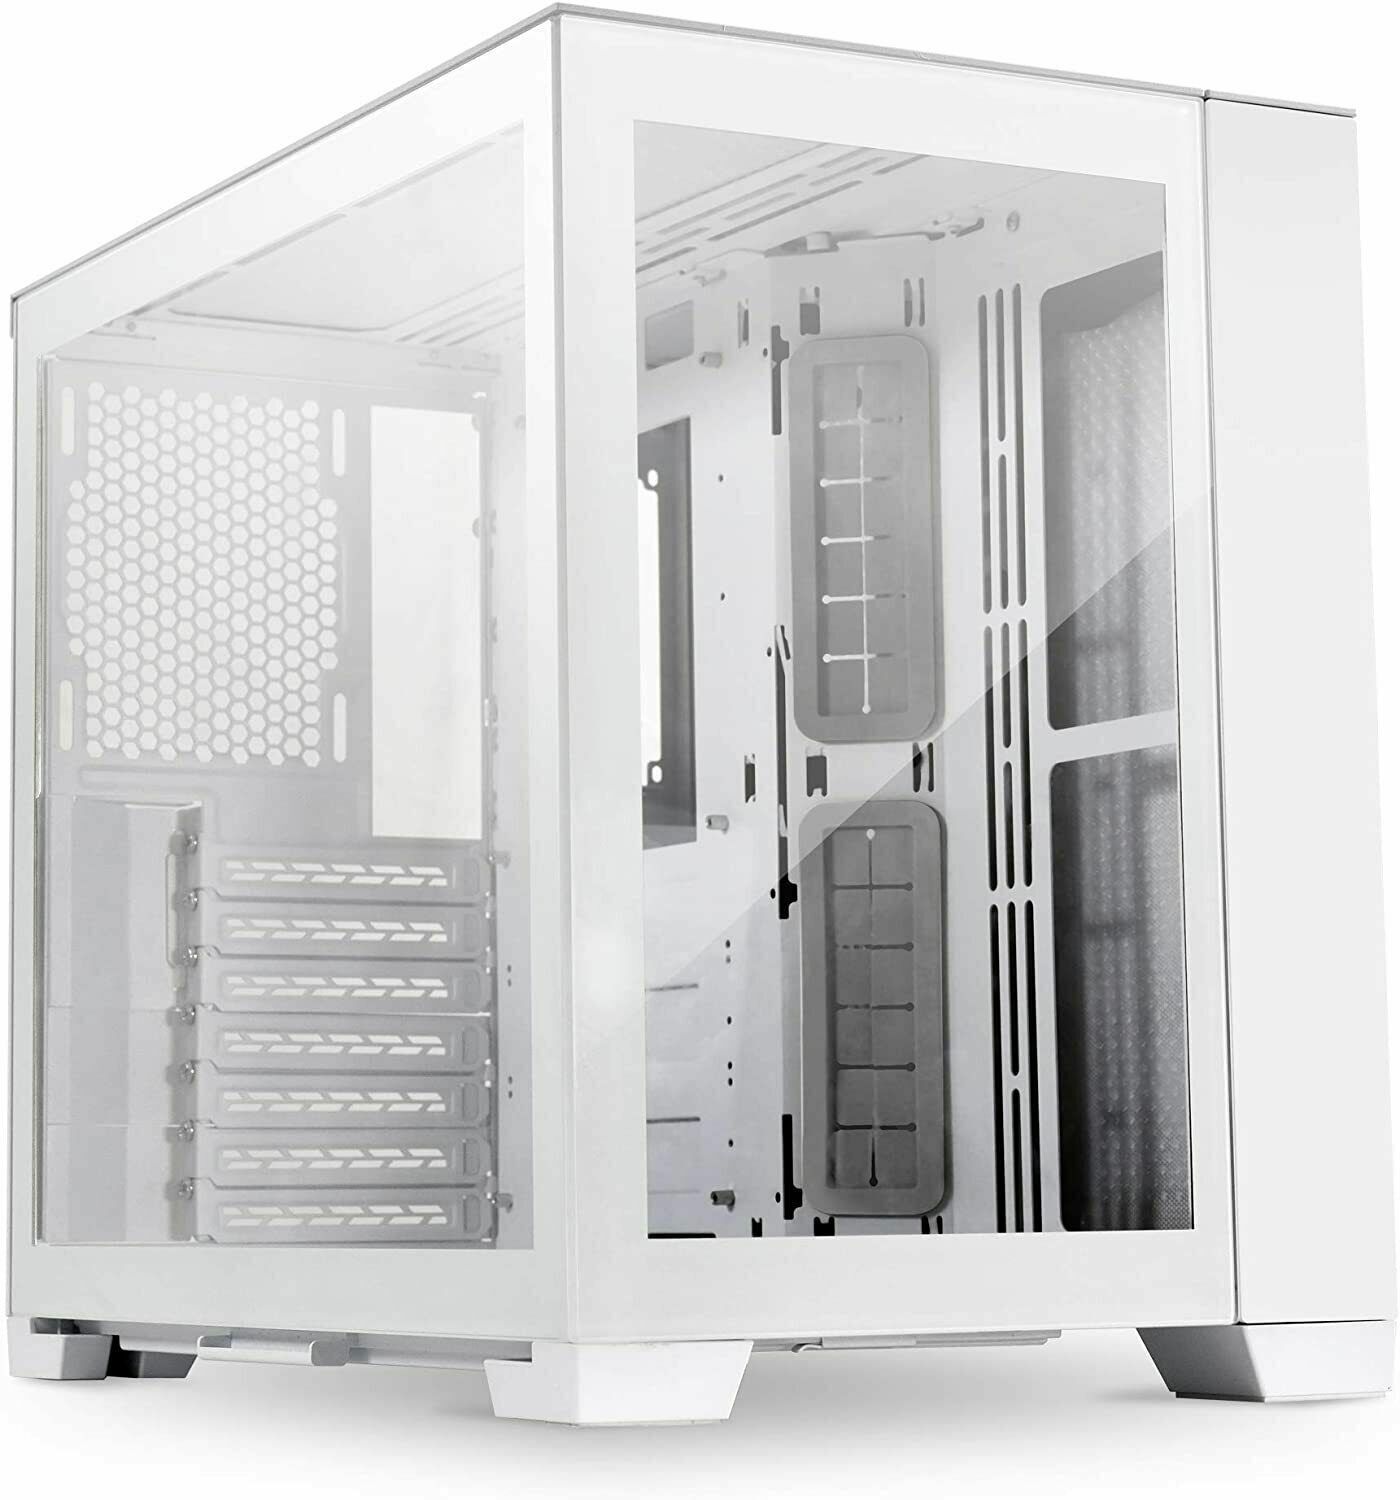 🔥Lian Li O11 Dynamic Mini-S Snow White Tempered Glass ATX Tower Computer Case🔥